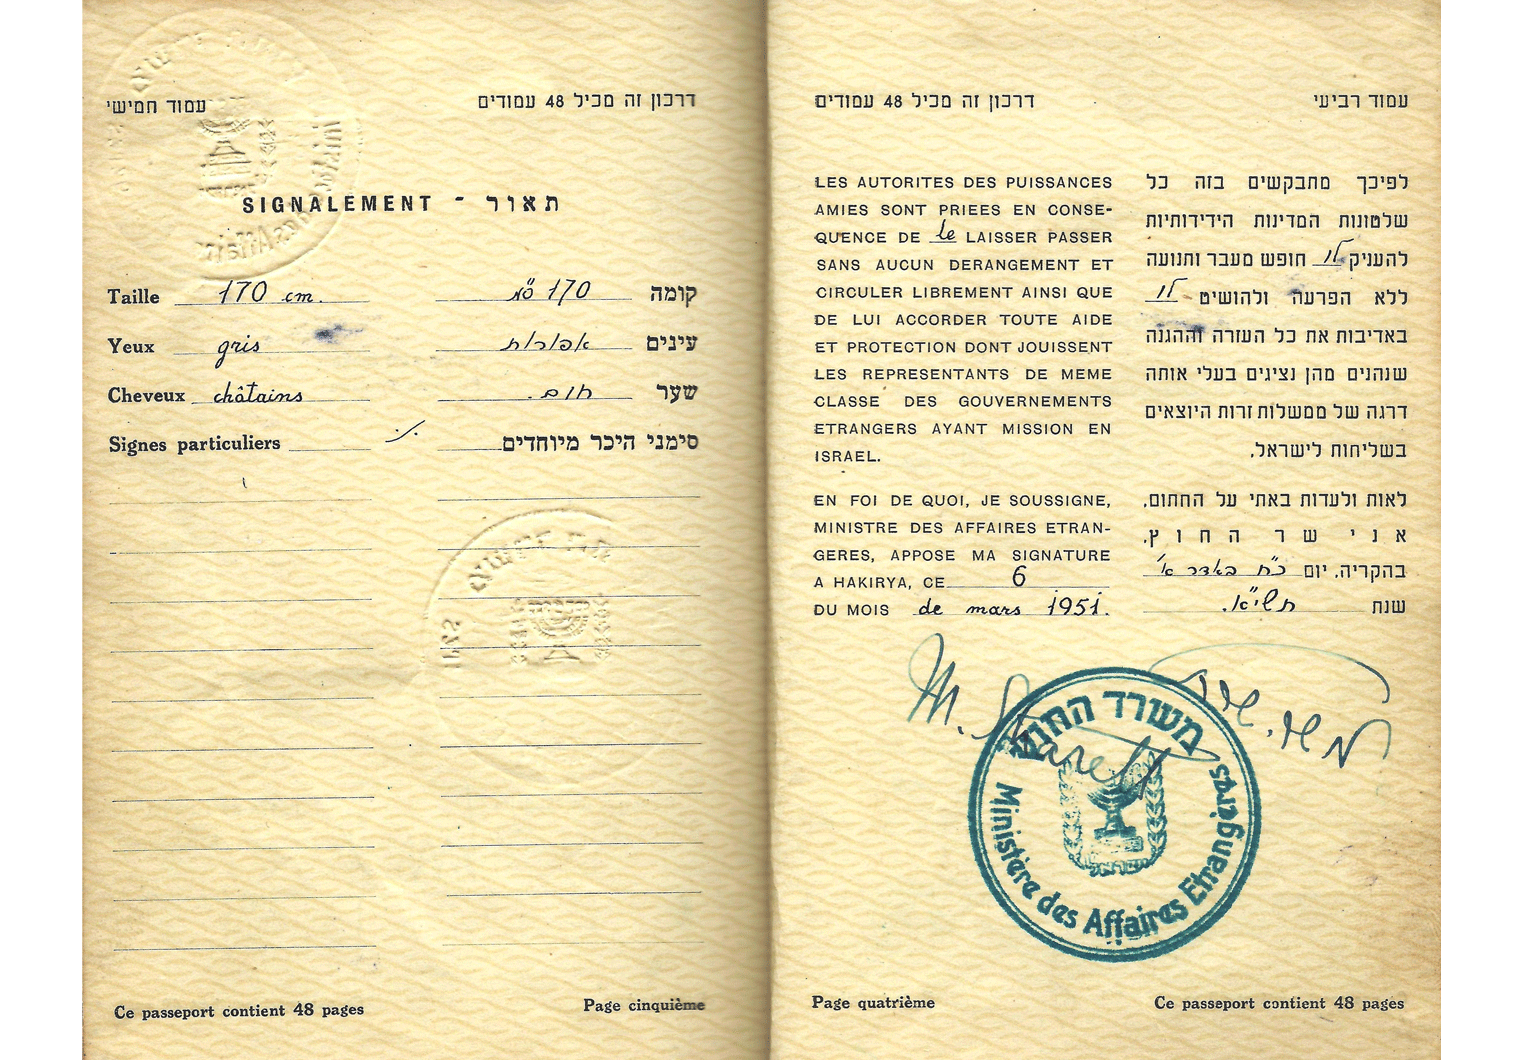 early Israeli Diplomatic passport